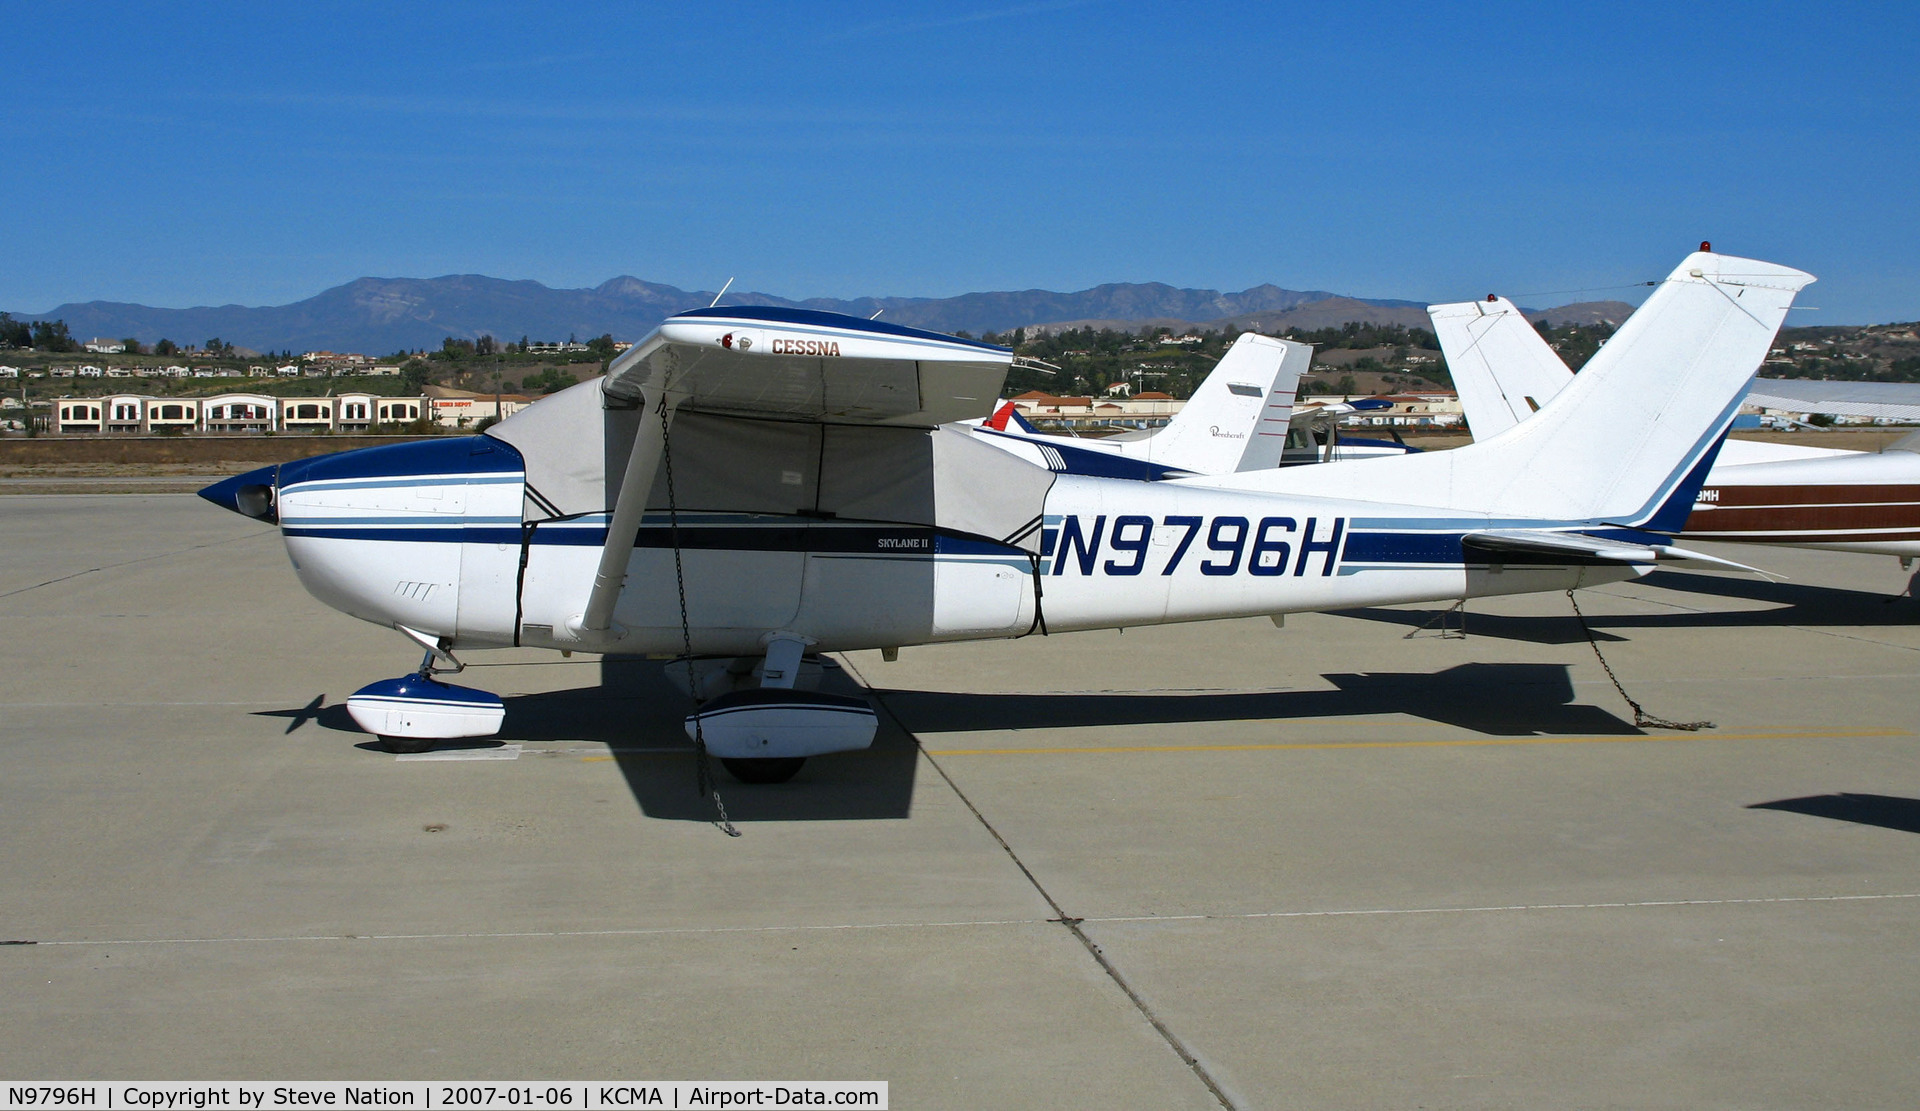 N9796H, 1981 Cessna 182R Skylane C/N 18268030, 1981 Cessna 182R at Camarillo, CA home base on sunny January day - blue cover optional!